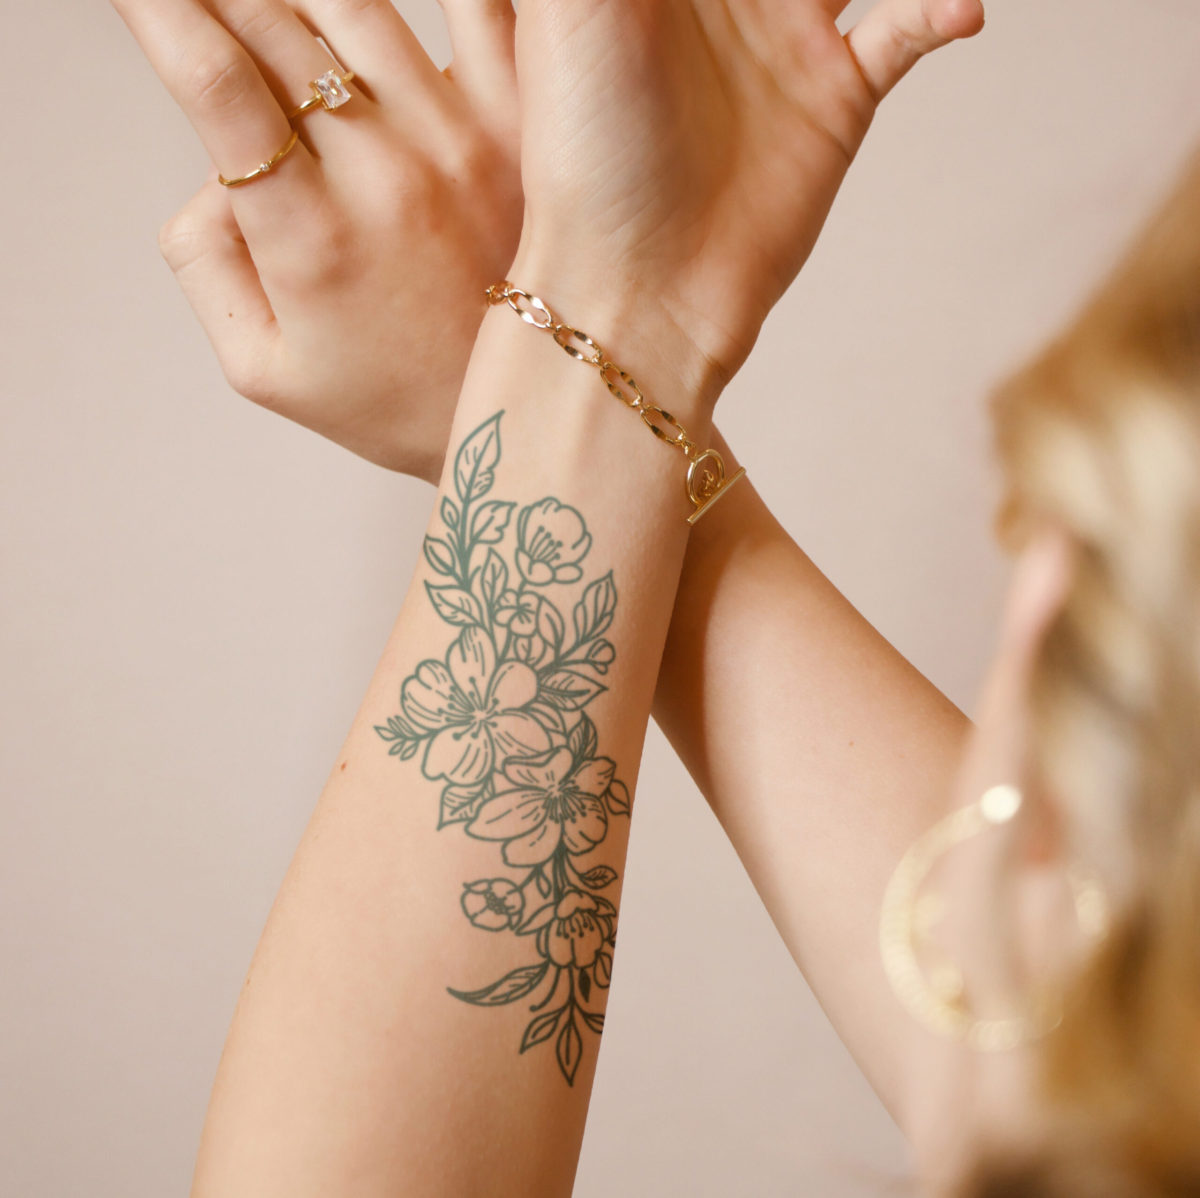 ls-614e/flower henna body paints tattoos stickers| Alibaba.com